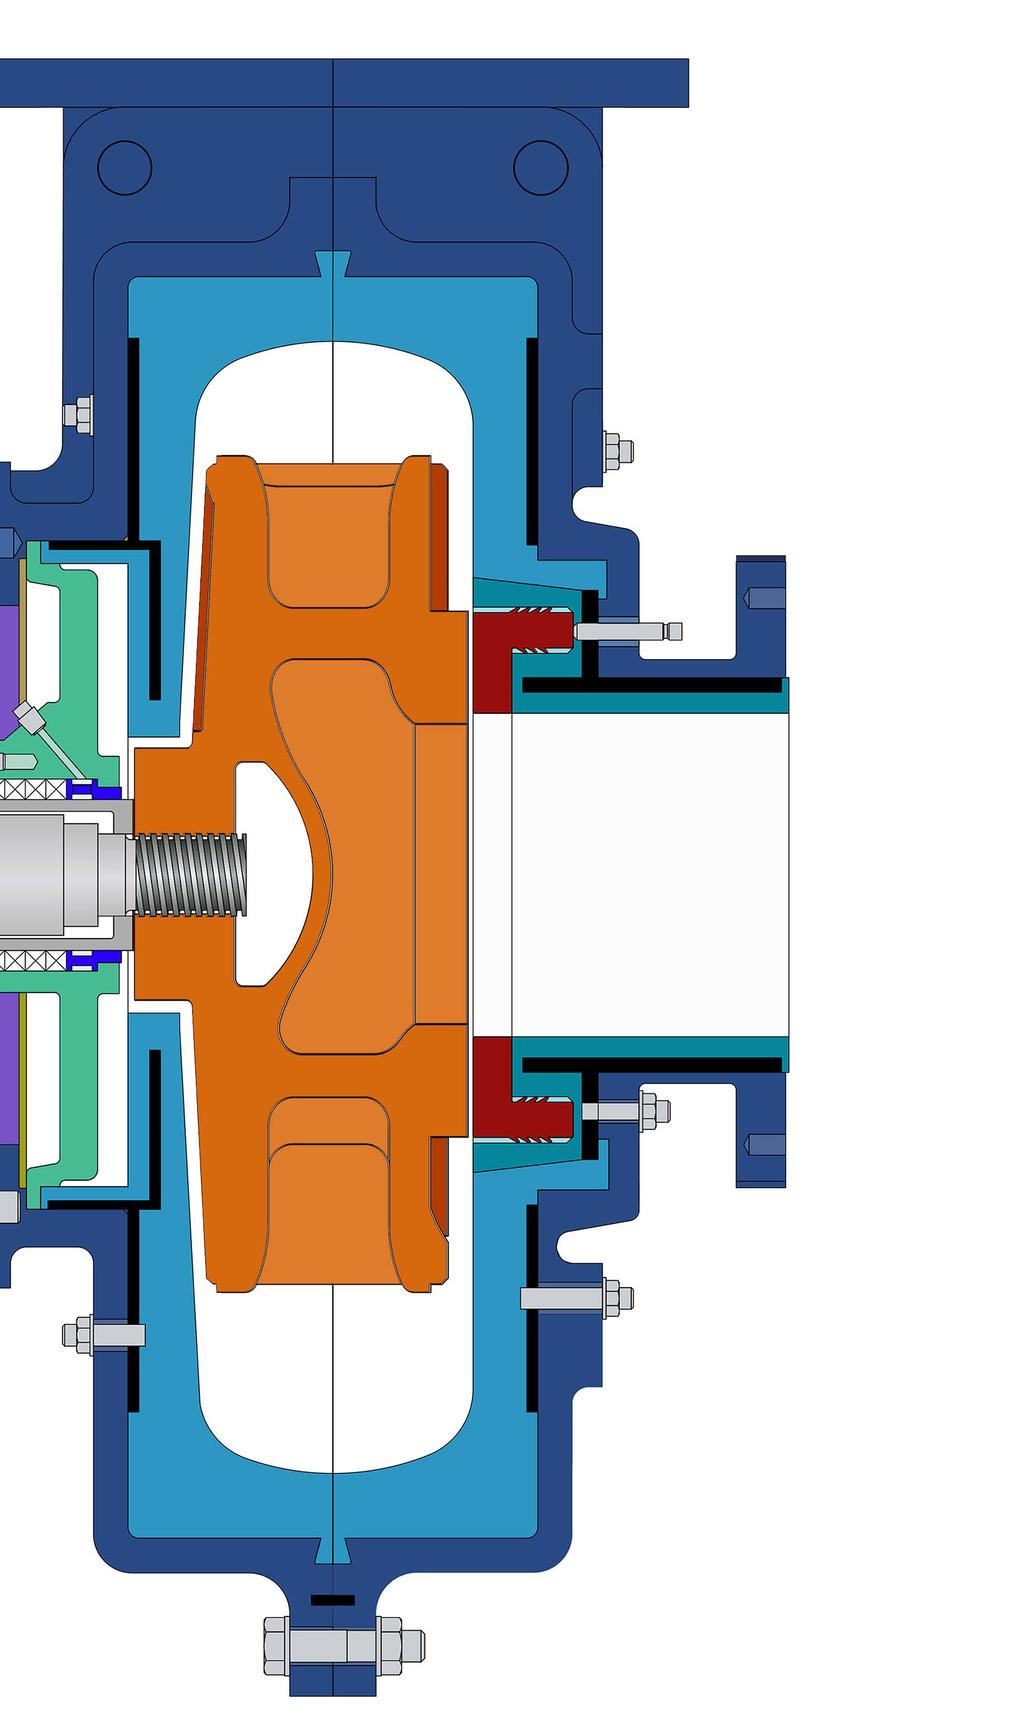 KREBS slurrymax TM Split Case Design Slurry Pumps - PDF Free Download